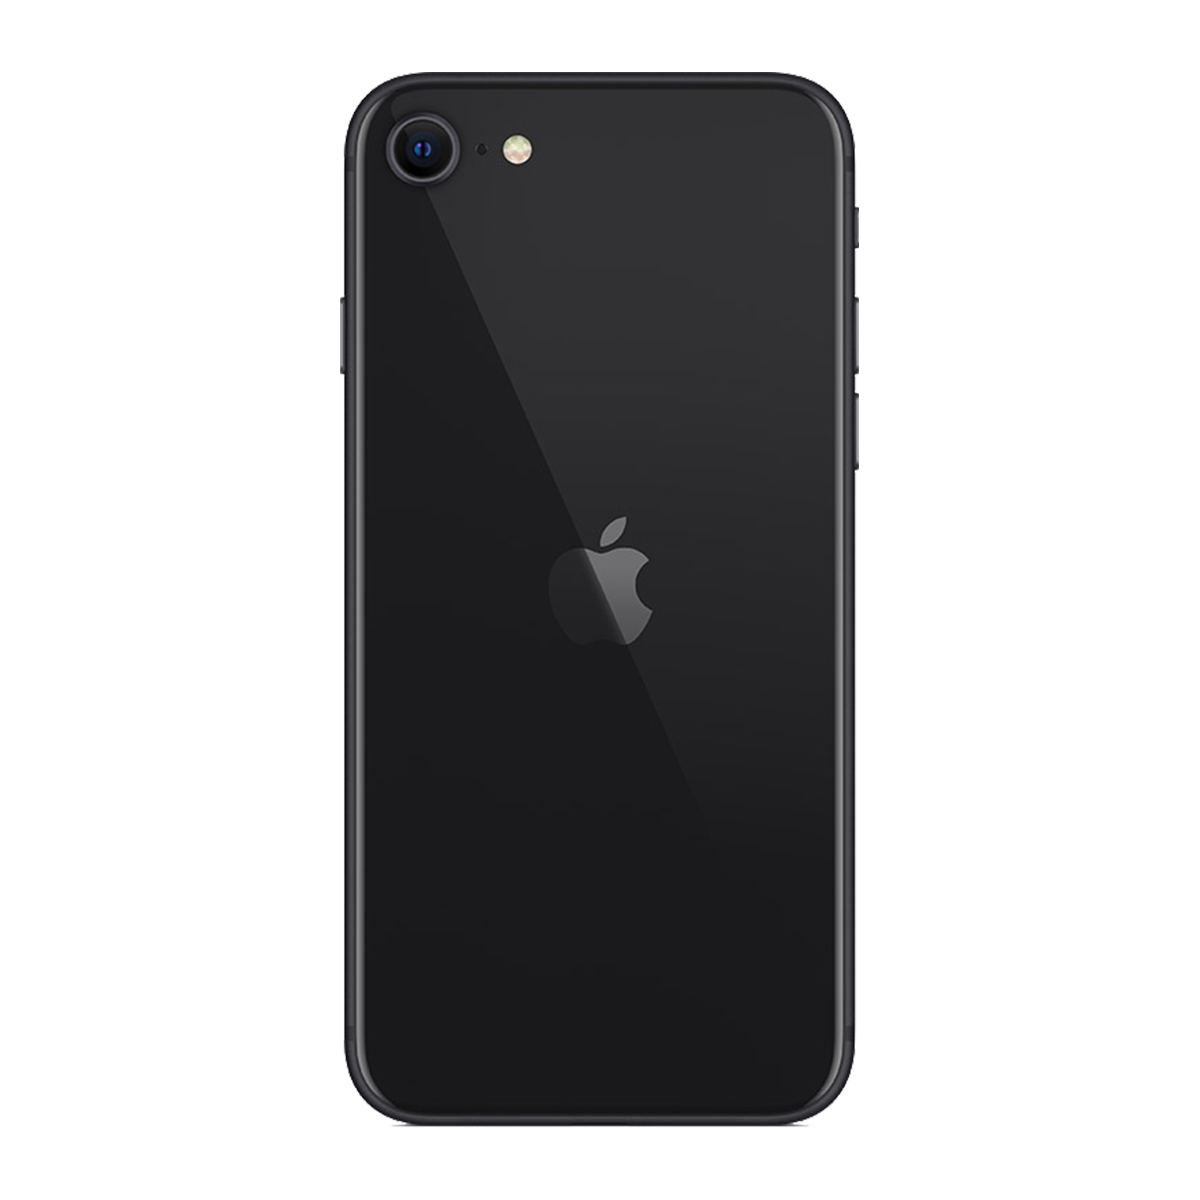 Apple iPhone SE 2 64GB Black LTE Cellular AT&T MX992LL/A